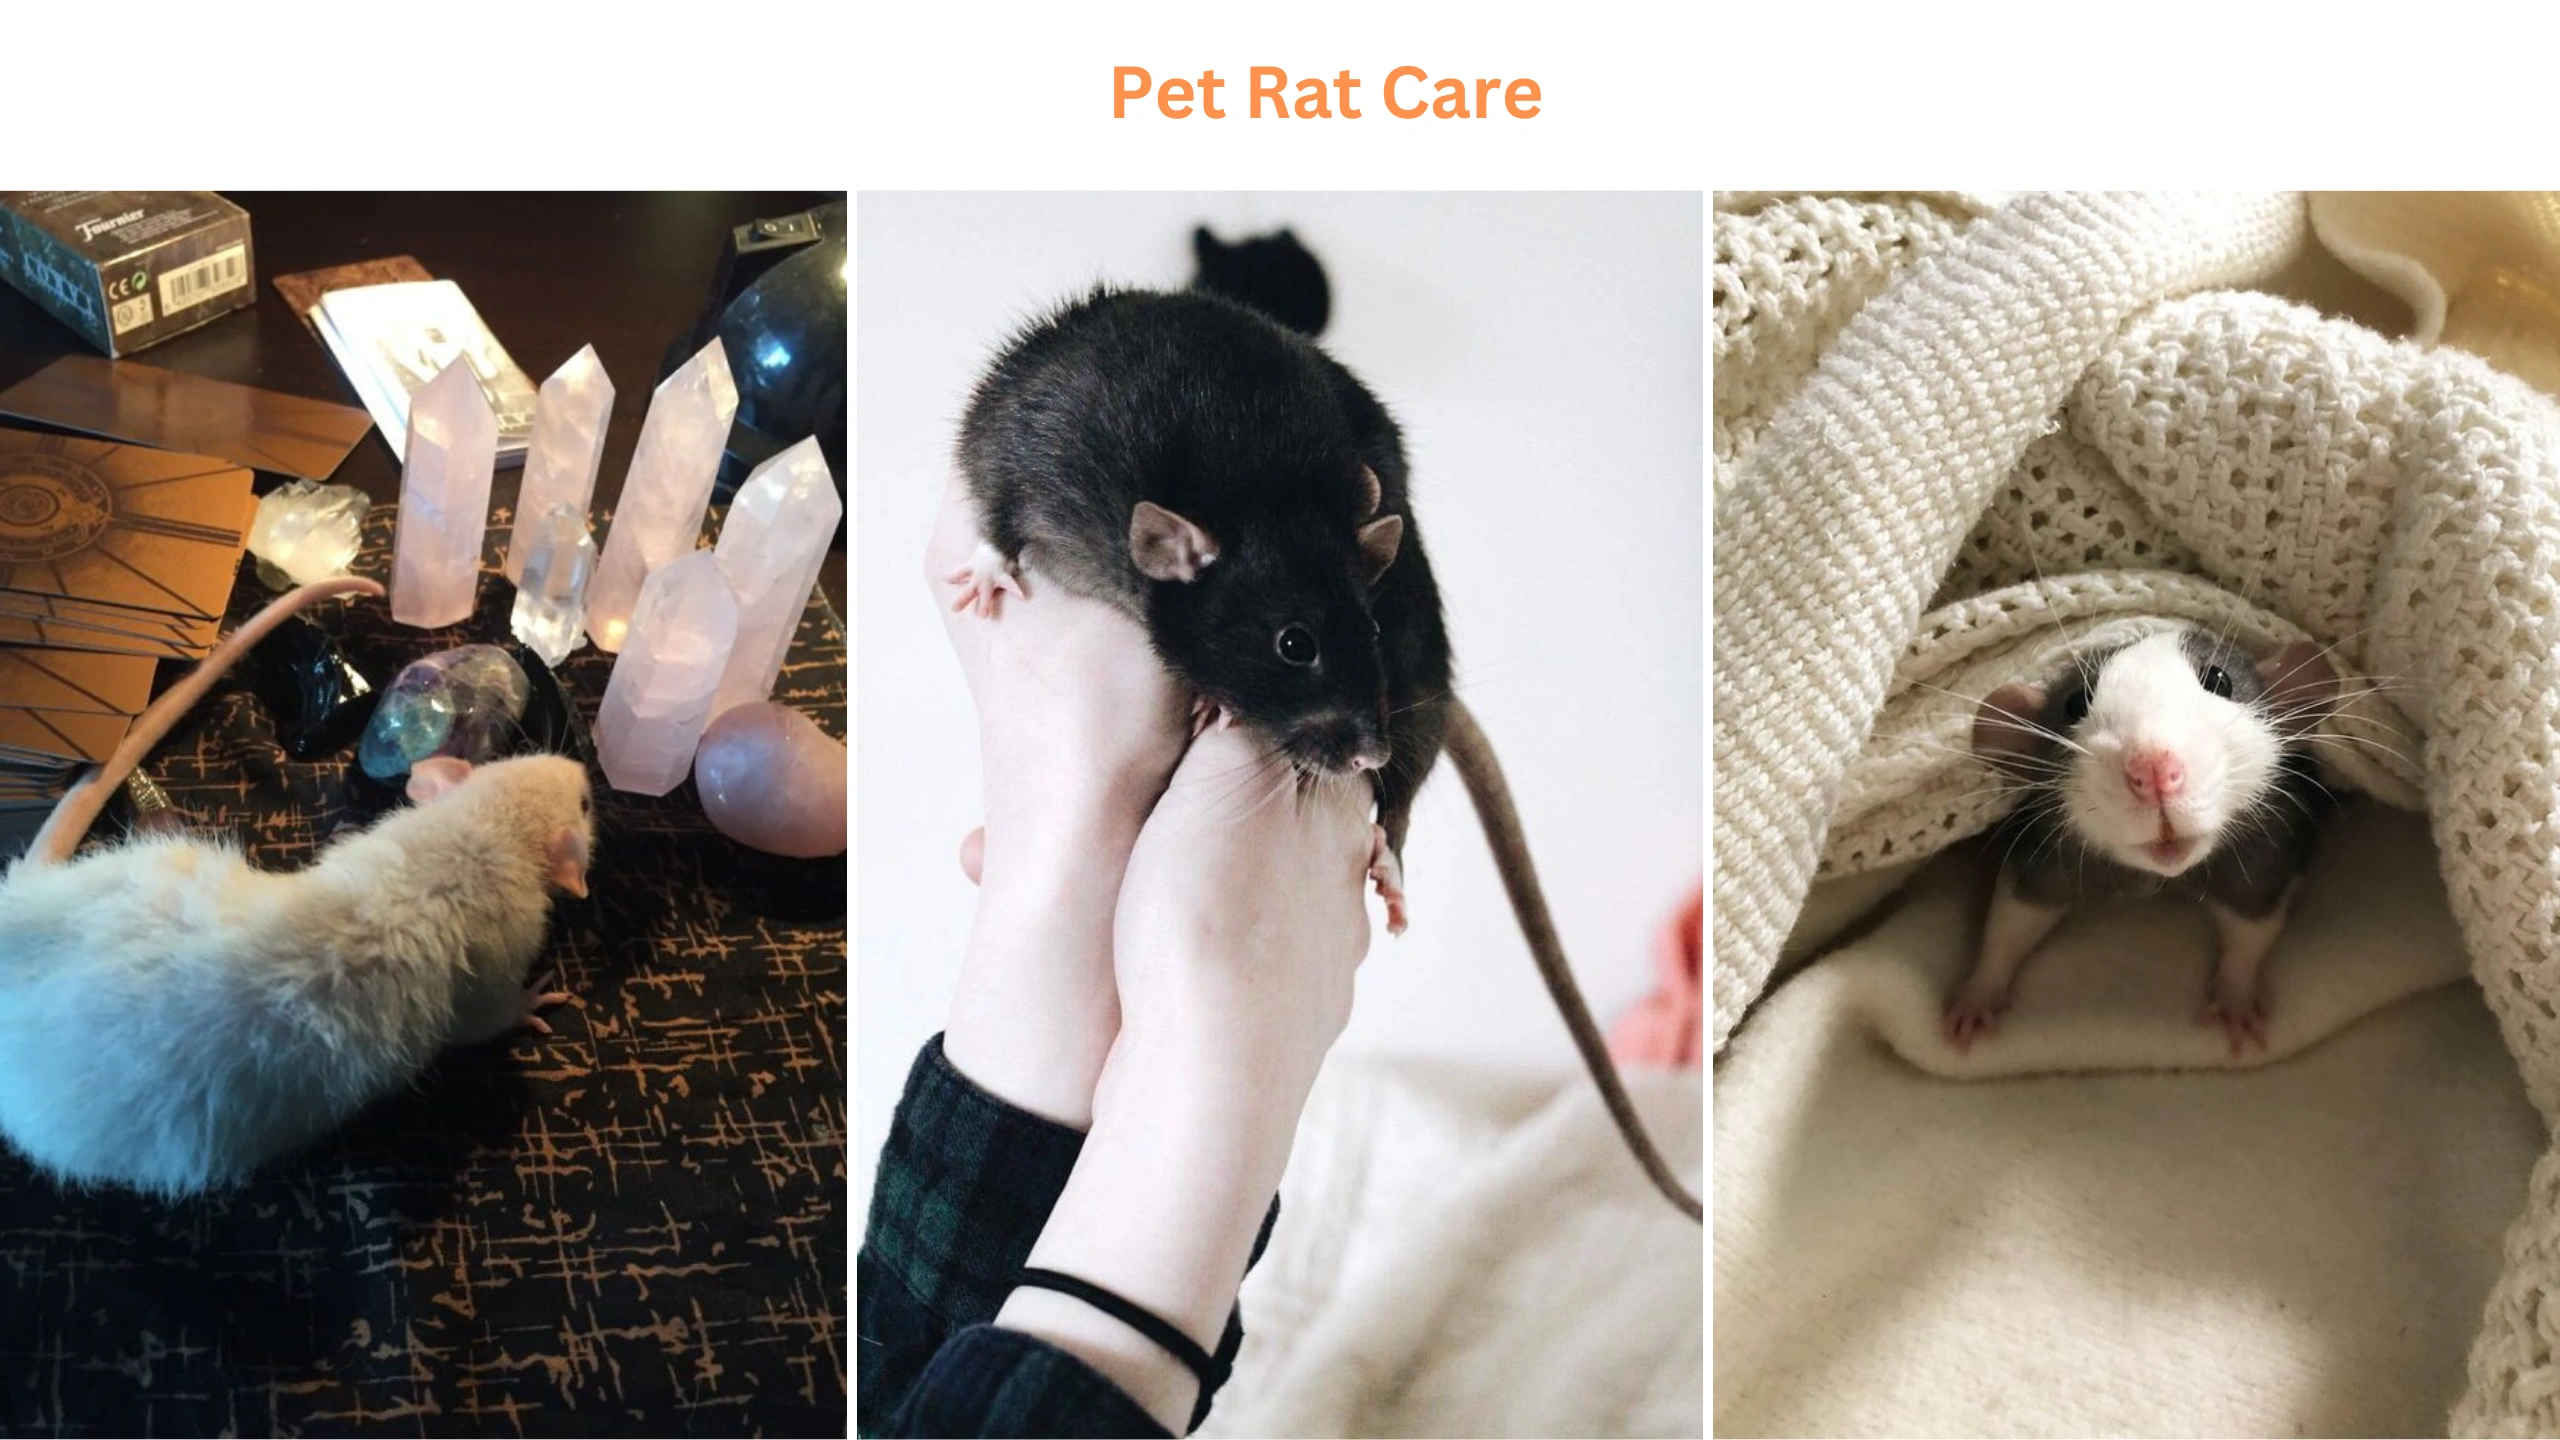 Pet rat care